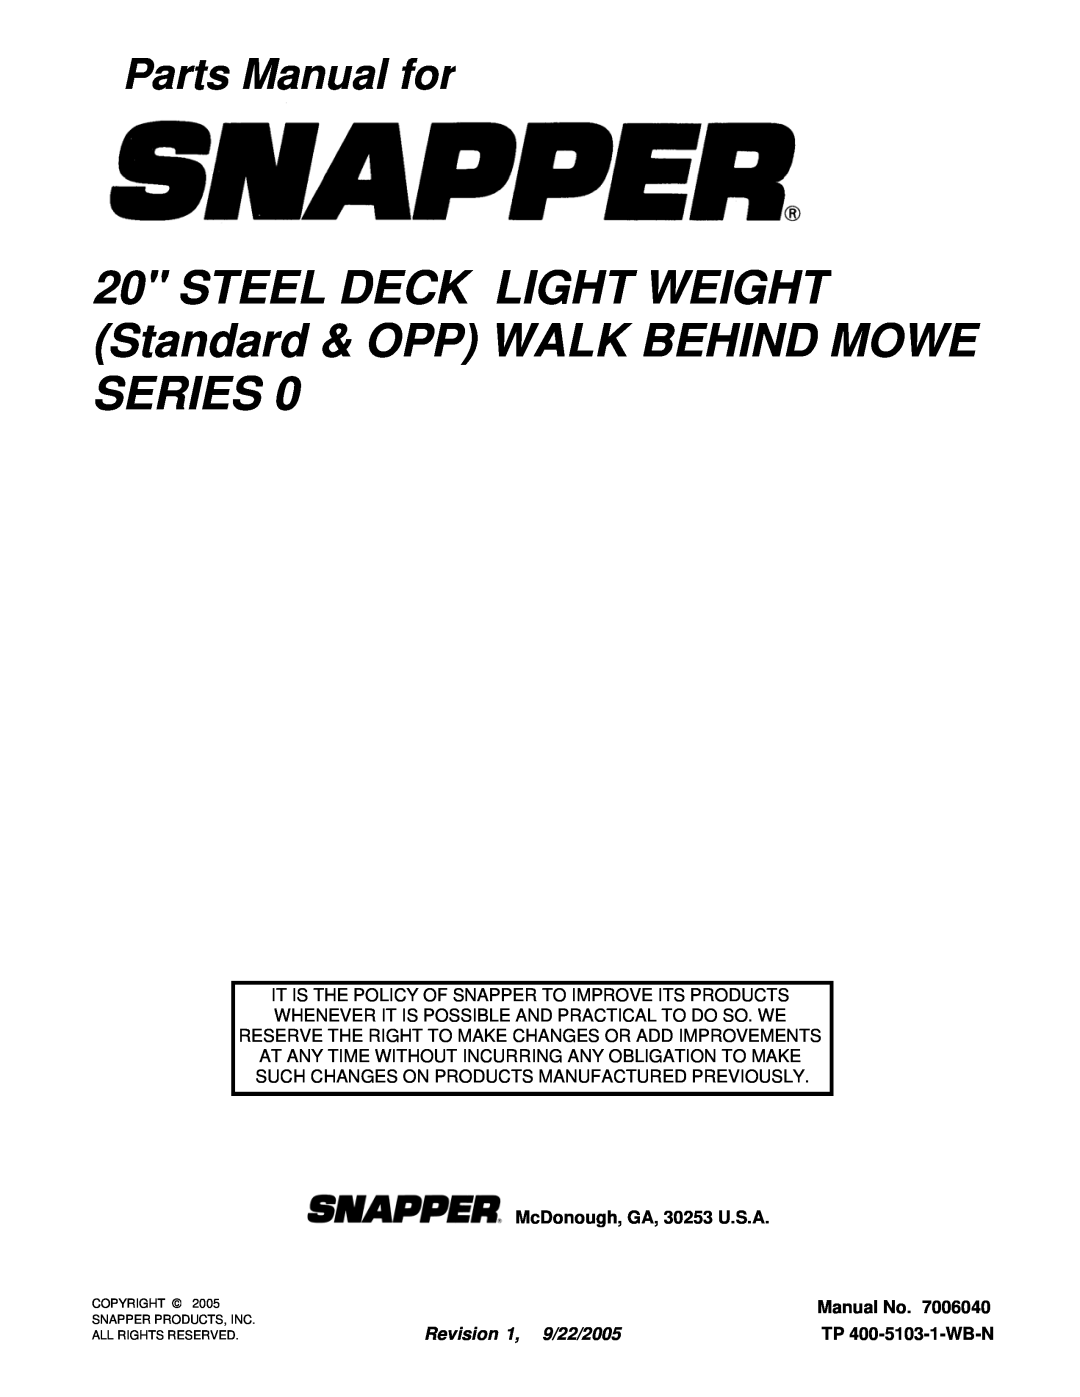 Snapper D20380, ELW400, R20400 STEEL DECK LIGHT WEIGHT Standard & OPP WALK BEHIND MOWE SERIES, Parts Manual for, Manual No 